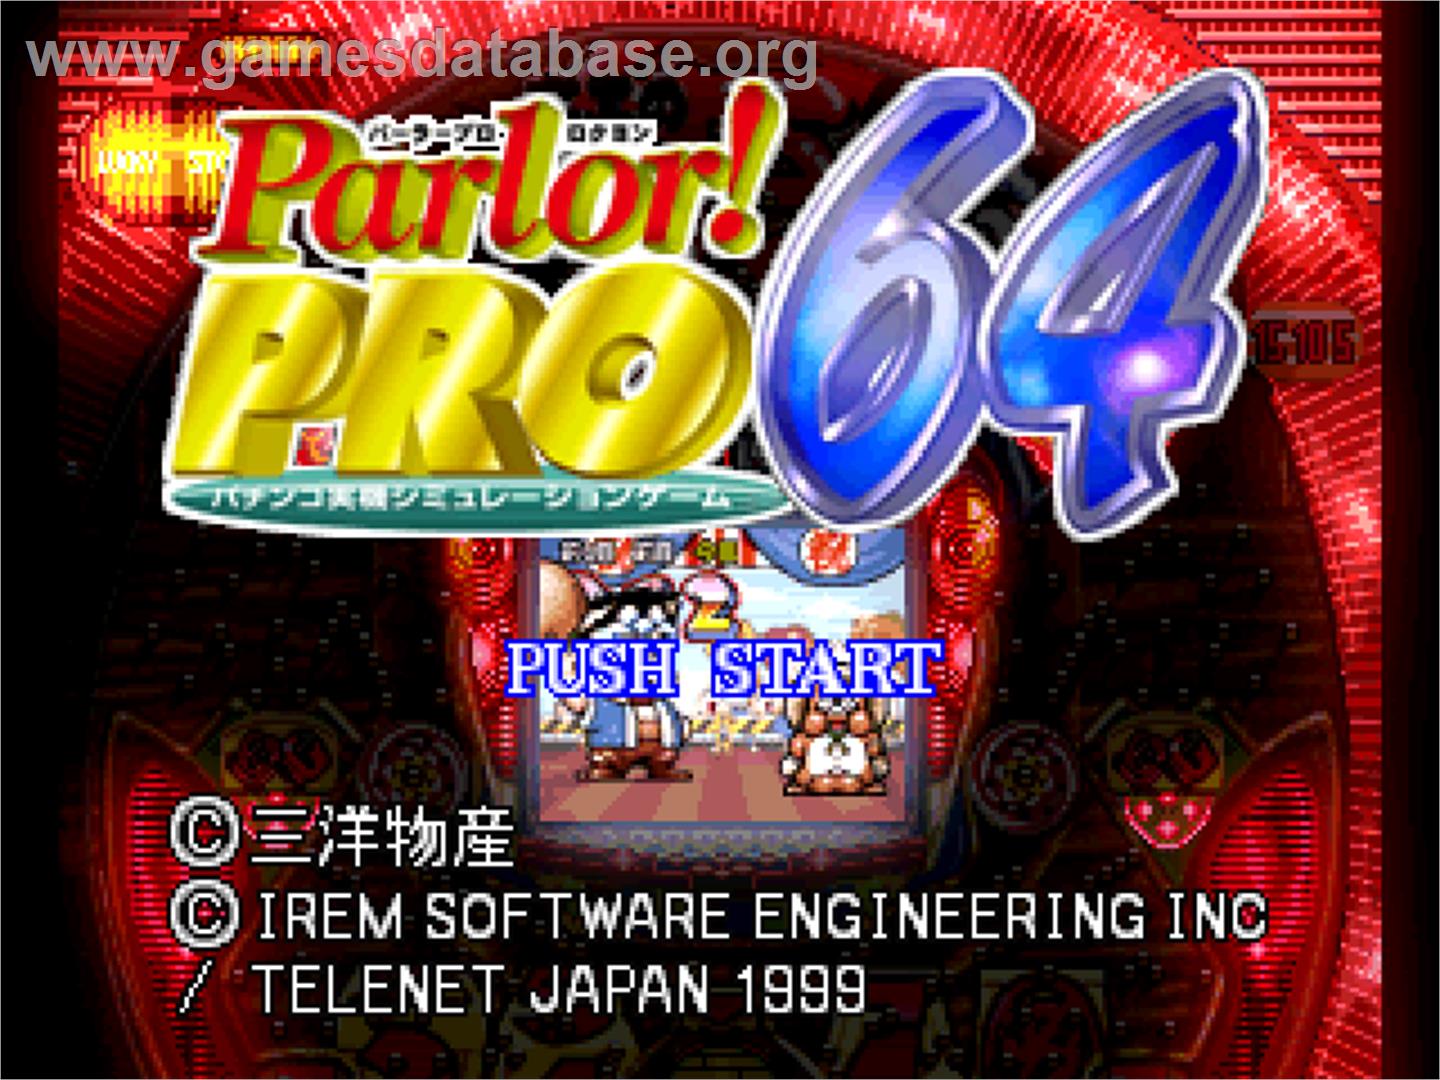 Parlor! Pro 64: Pachinko Jikki Simulation - Nintendo N64 - Artwork - Title Screen